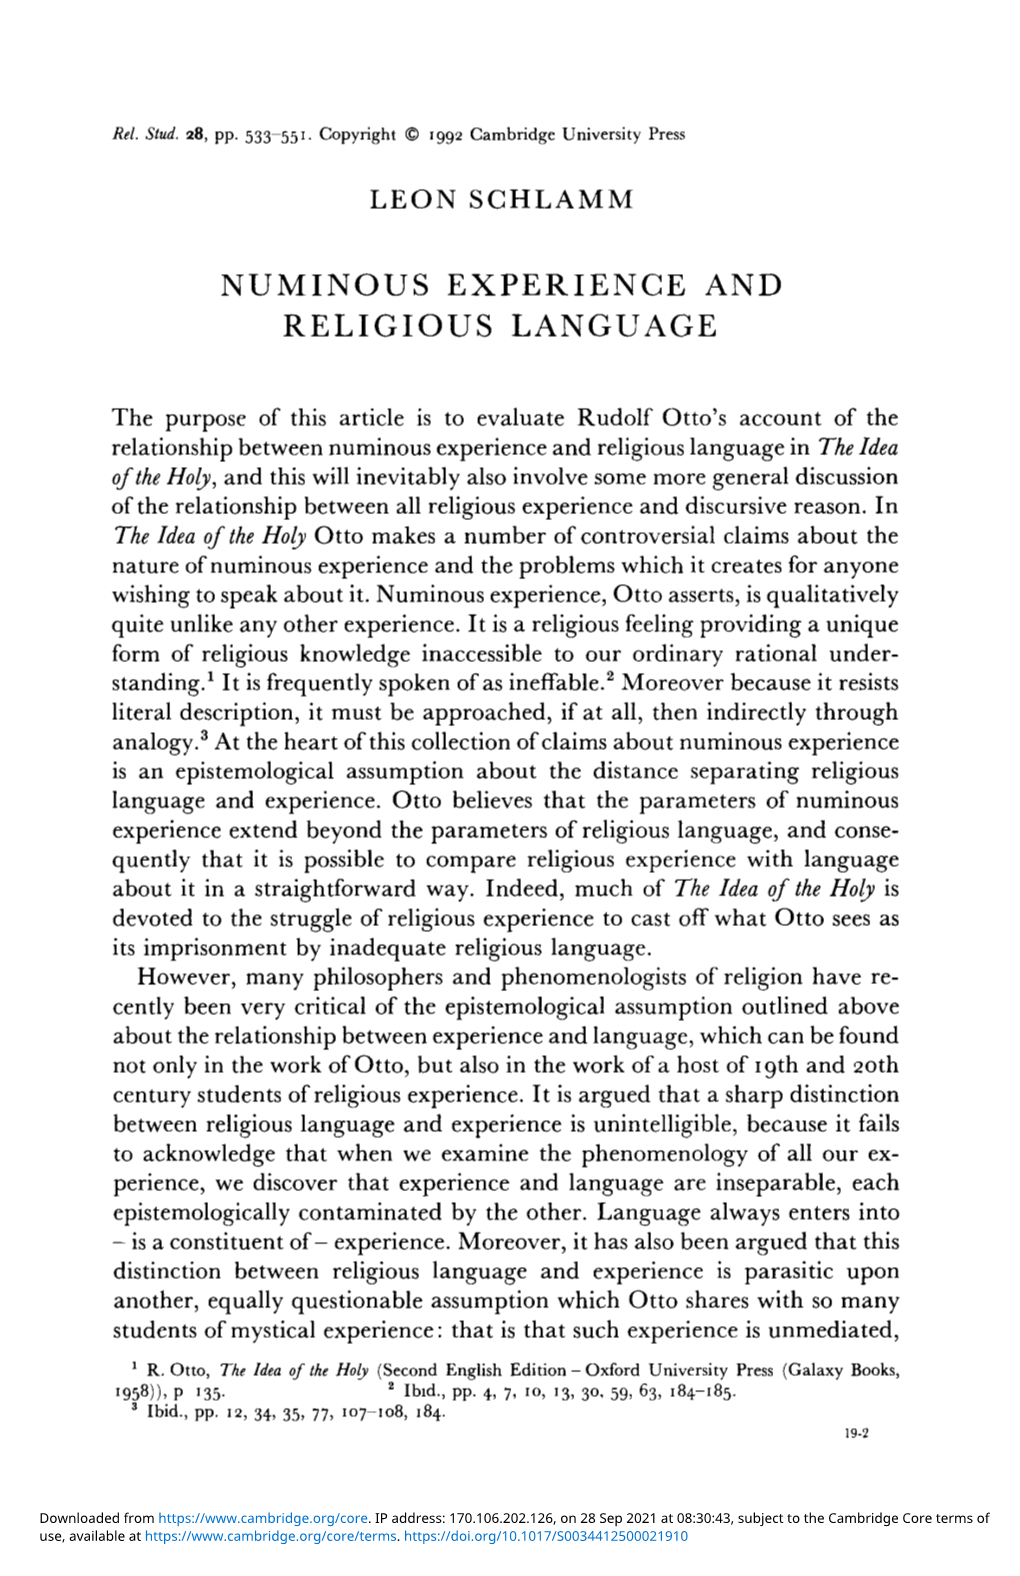 Numinous Experience and Religious Language